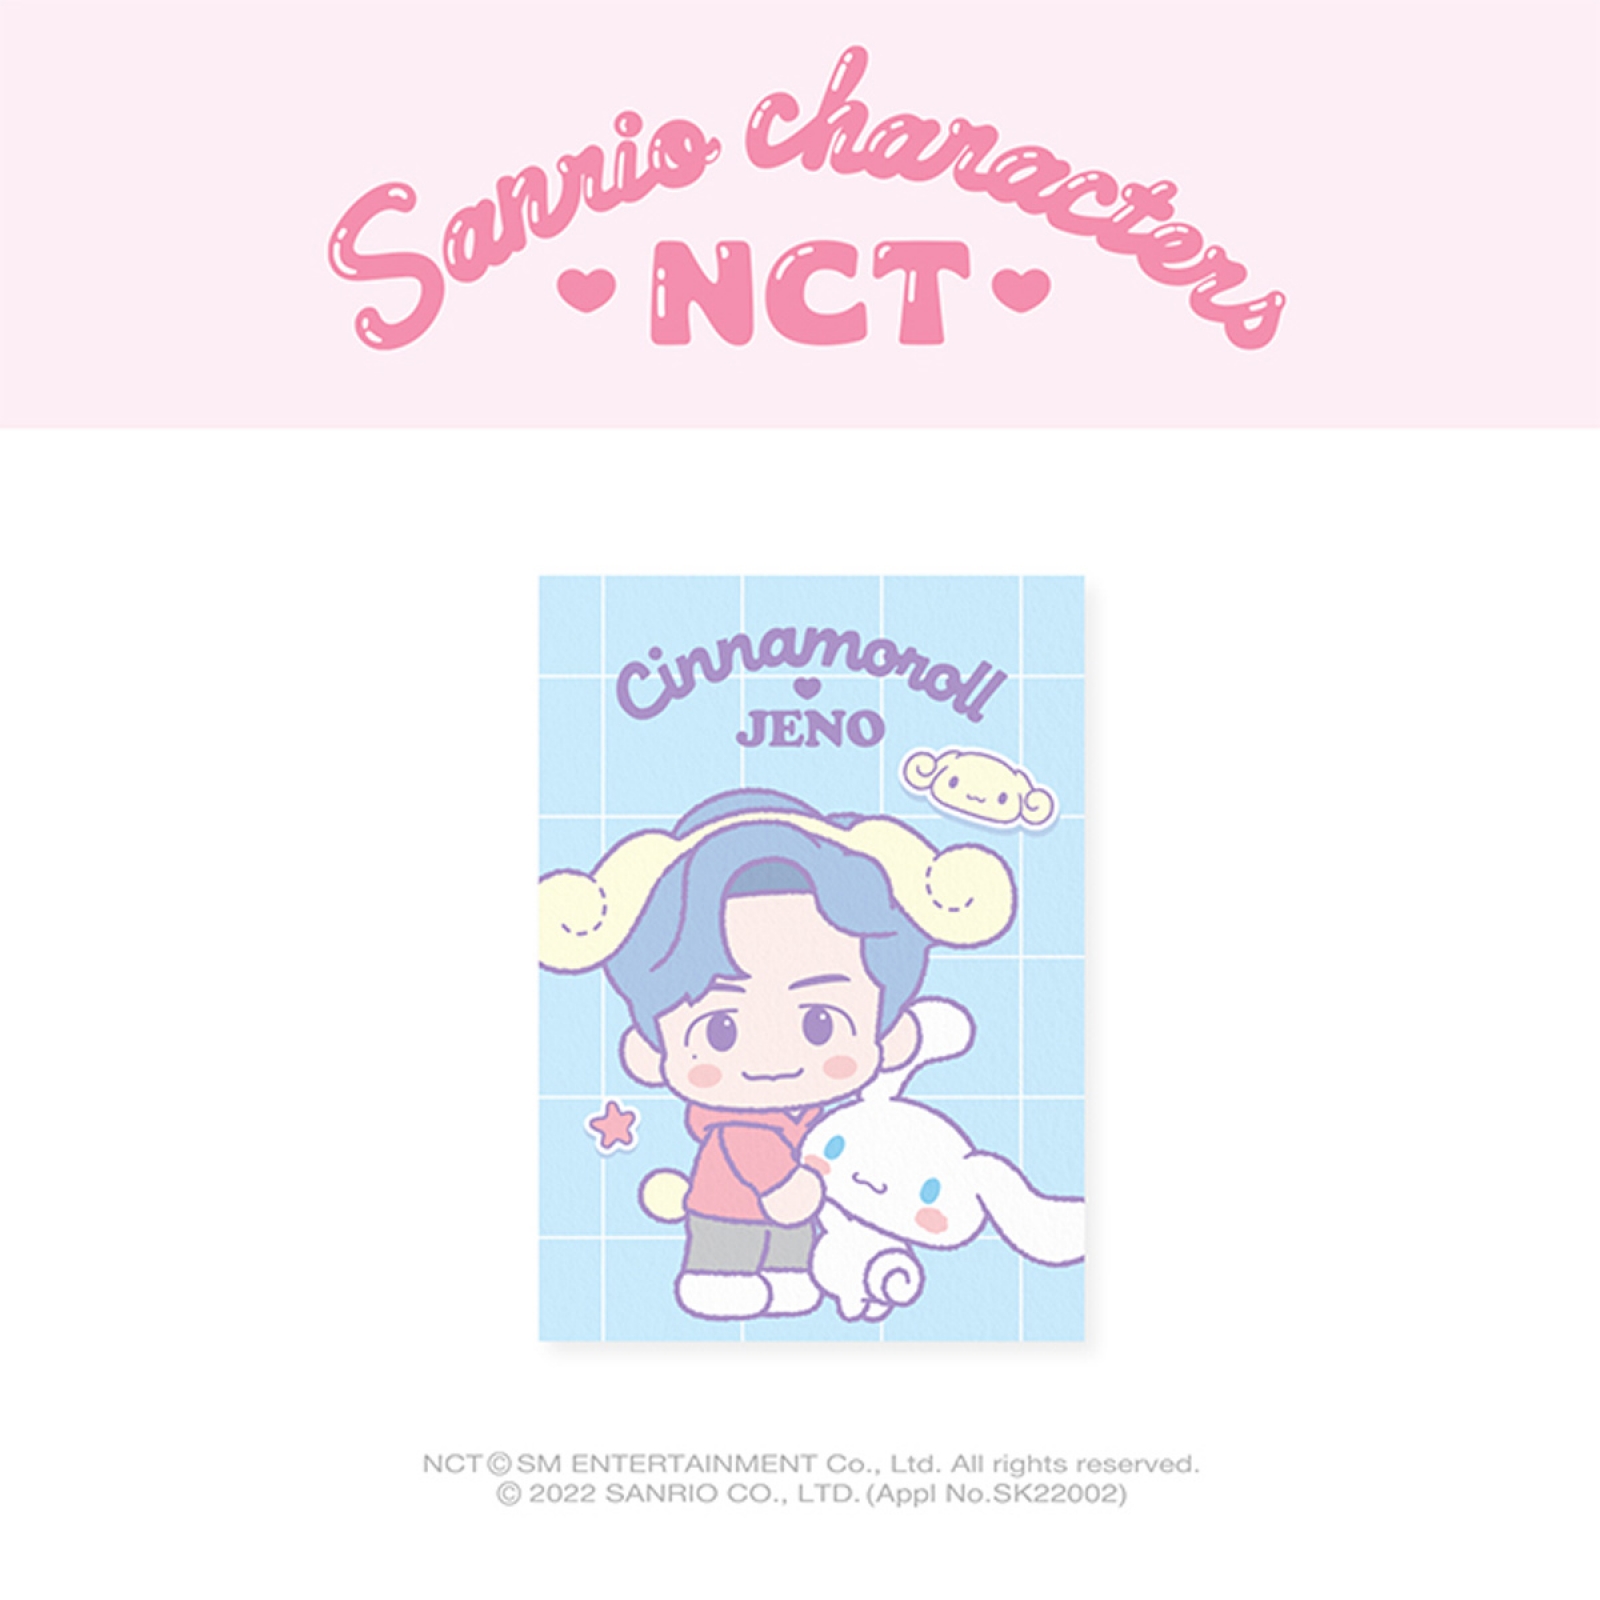 NCT - はがき/NCT X SANRIO CHARACTERS